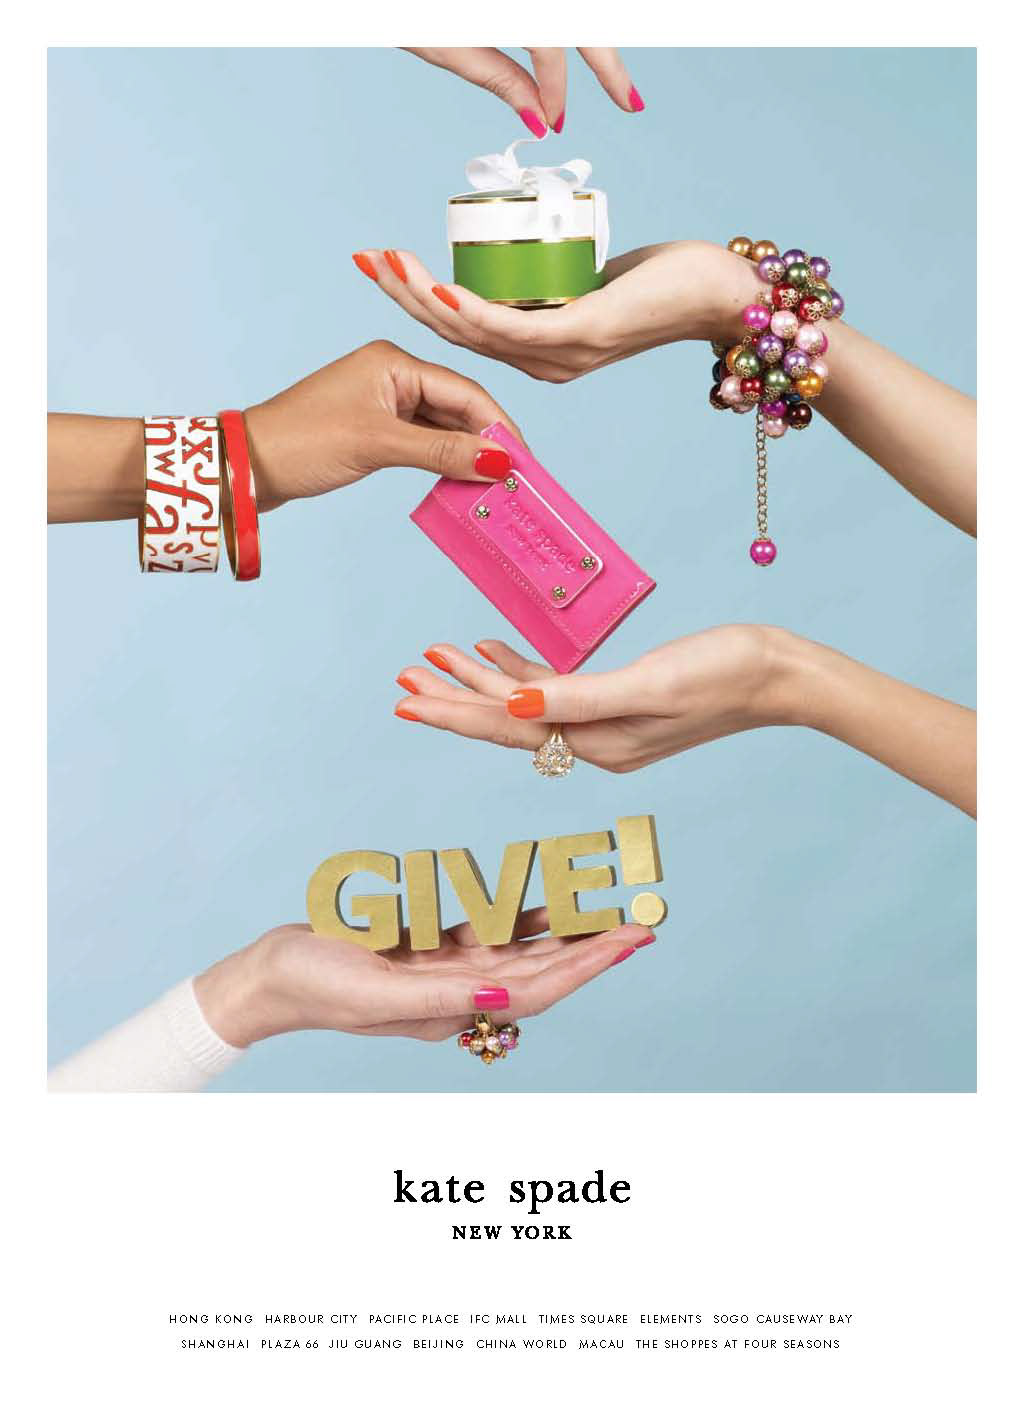 Shirelle Minton Design - Print Advertisements | kate spade